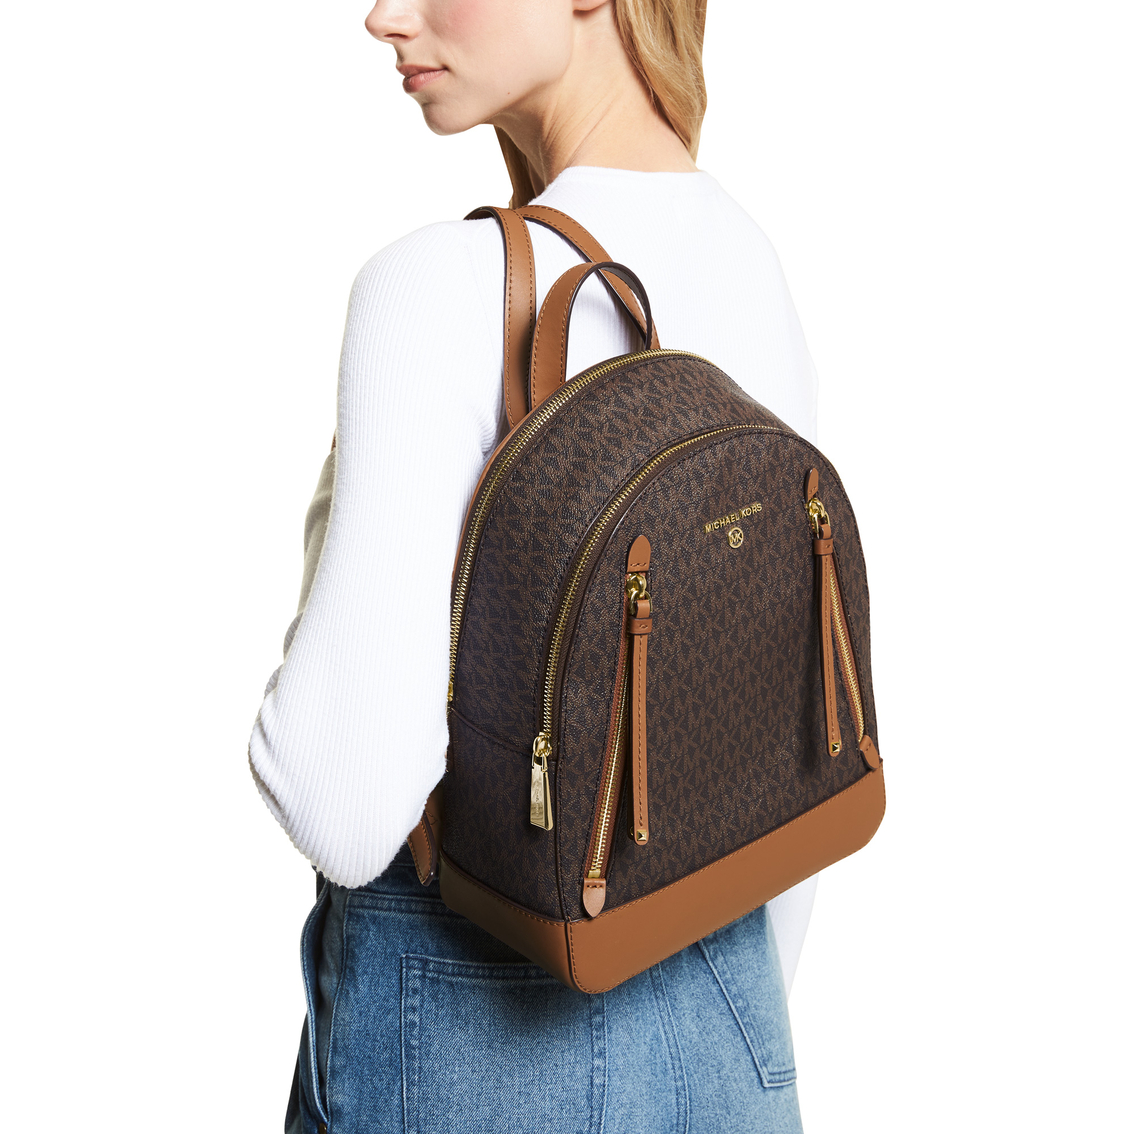 Michael Kors Brooklyn Medium Backpack - Image 4 of 4